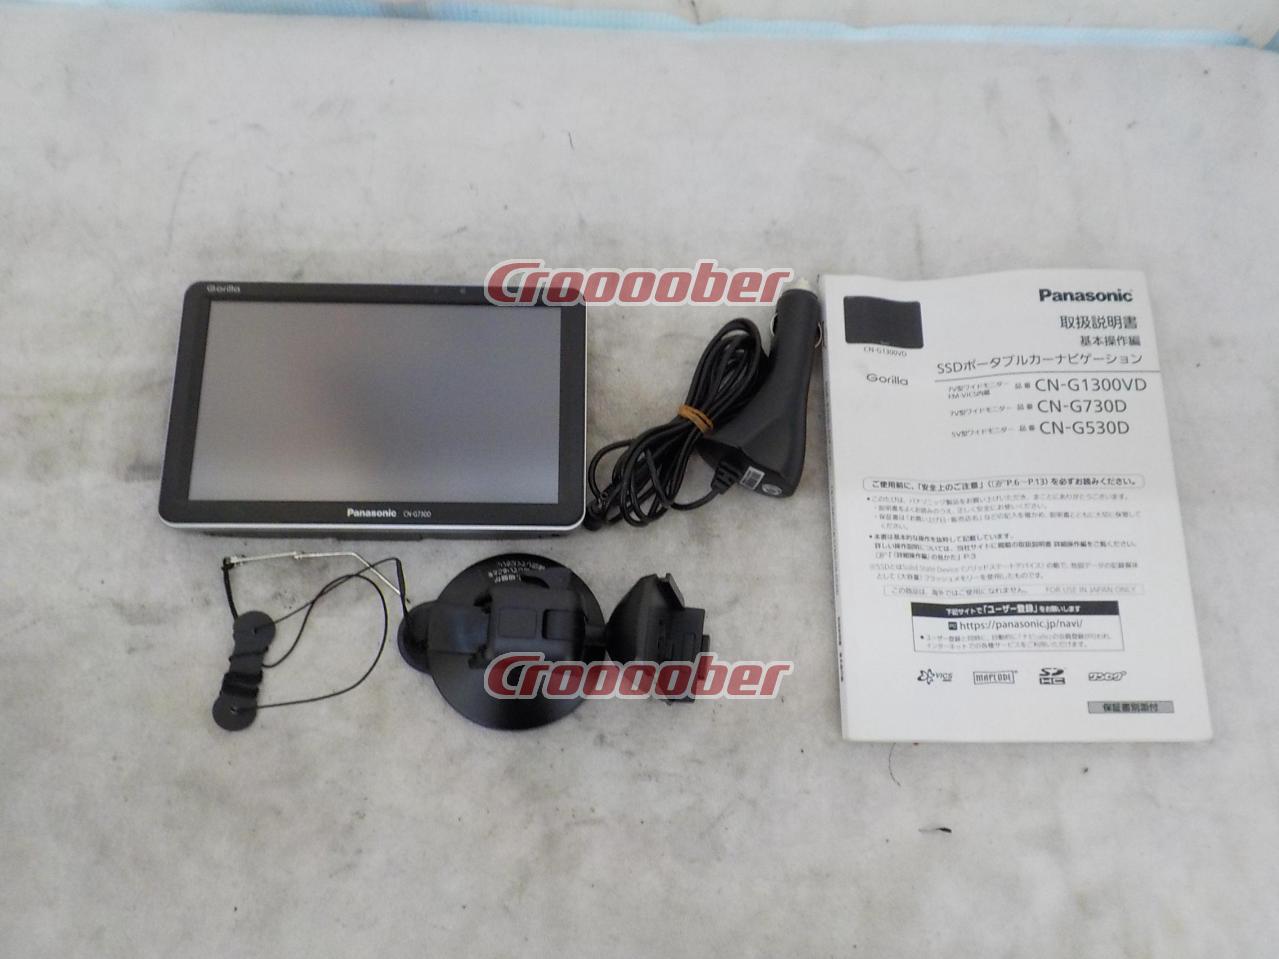 Panasonic Gorilla CN-G730D | Portable Navigation(digital) | Croooober